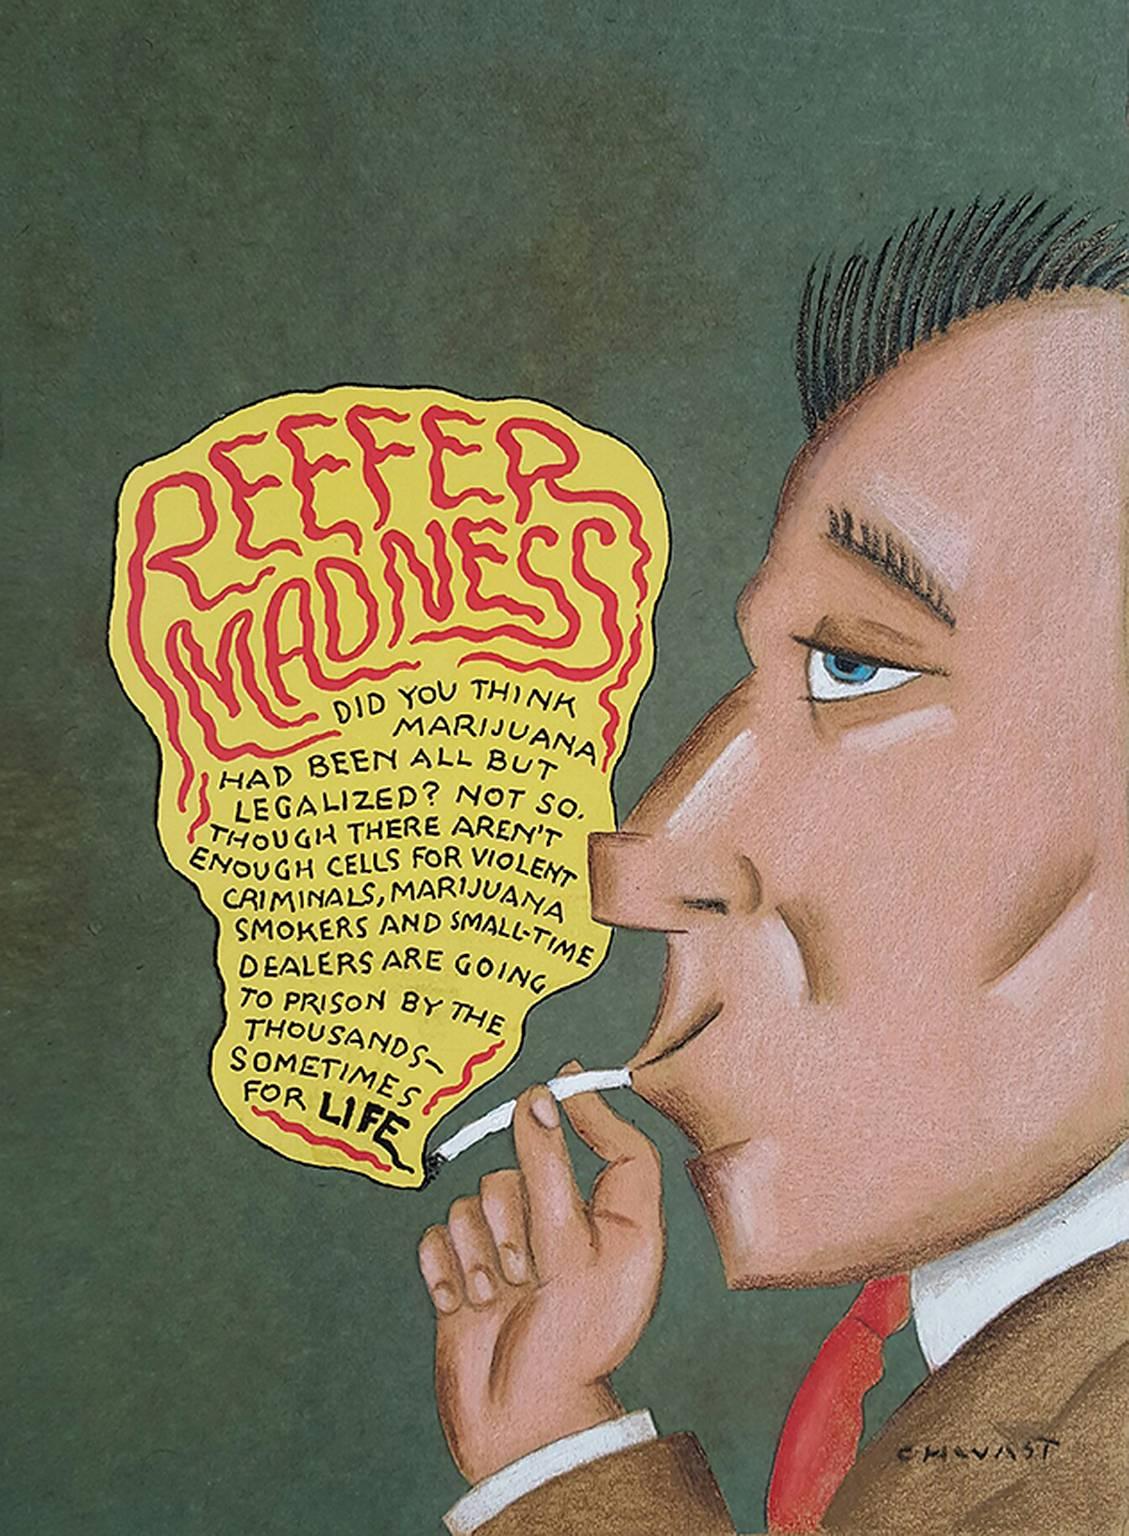 Seymour Chwast Portrait - Reefer Madness, Marajuana  - Pot  - Cannabis - Cover Atlantic Monthly Magazine